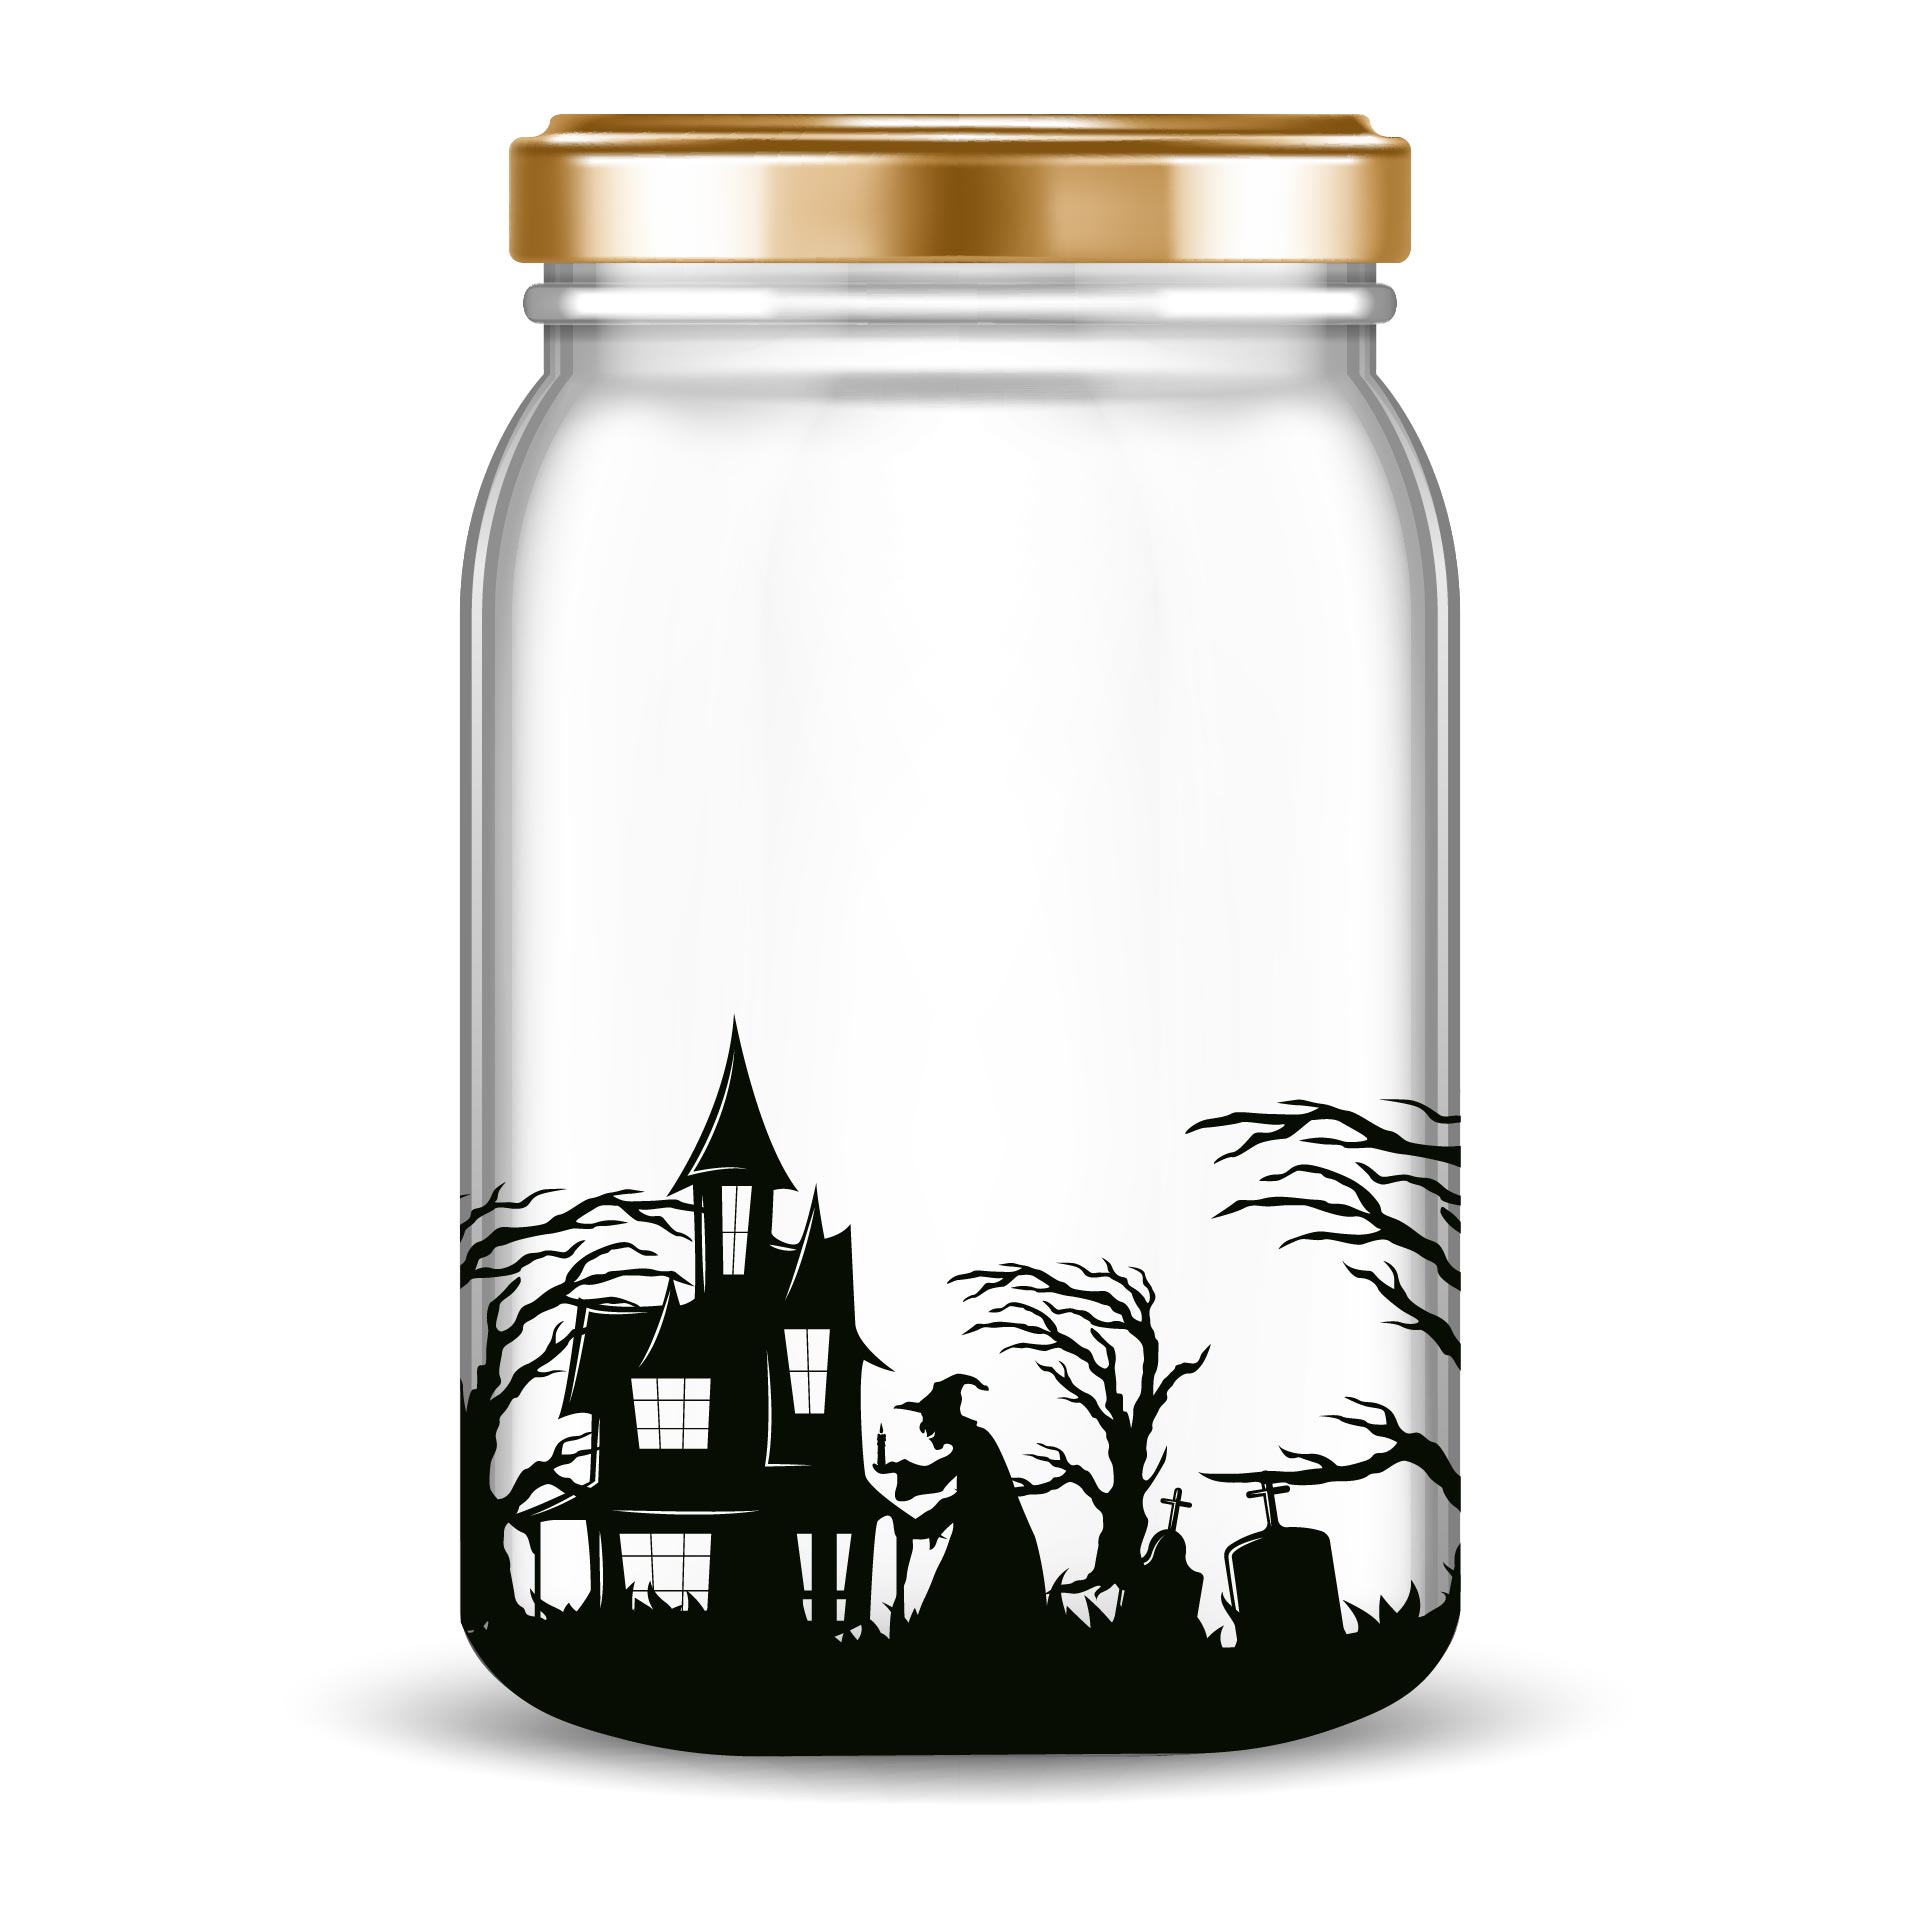 Printable Mason Jar Halloween